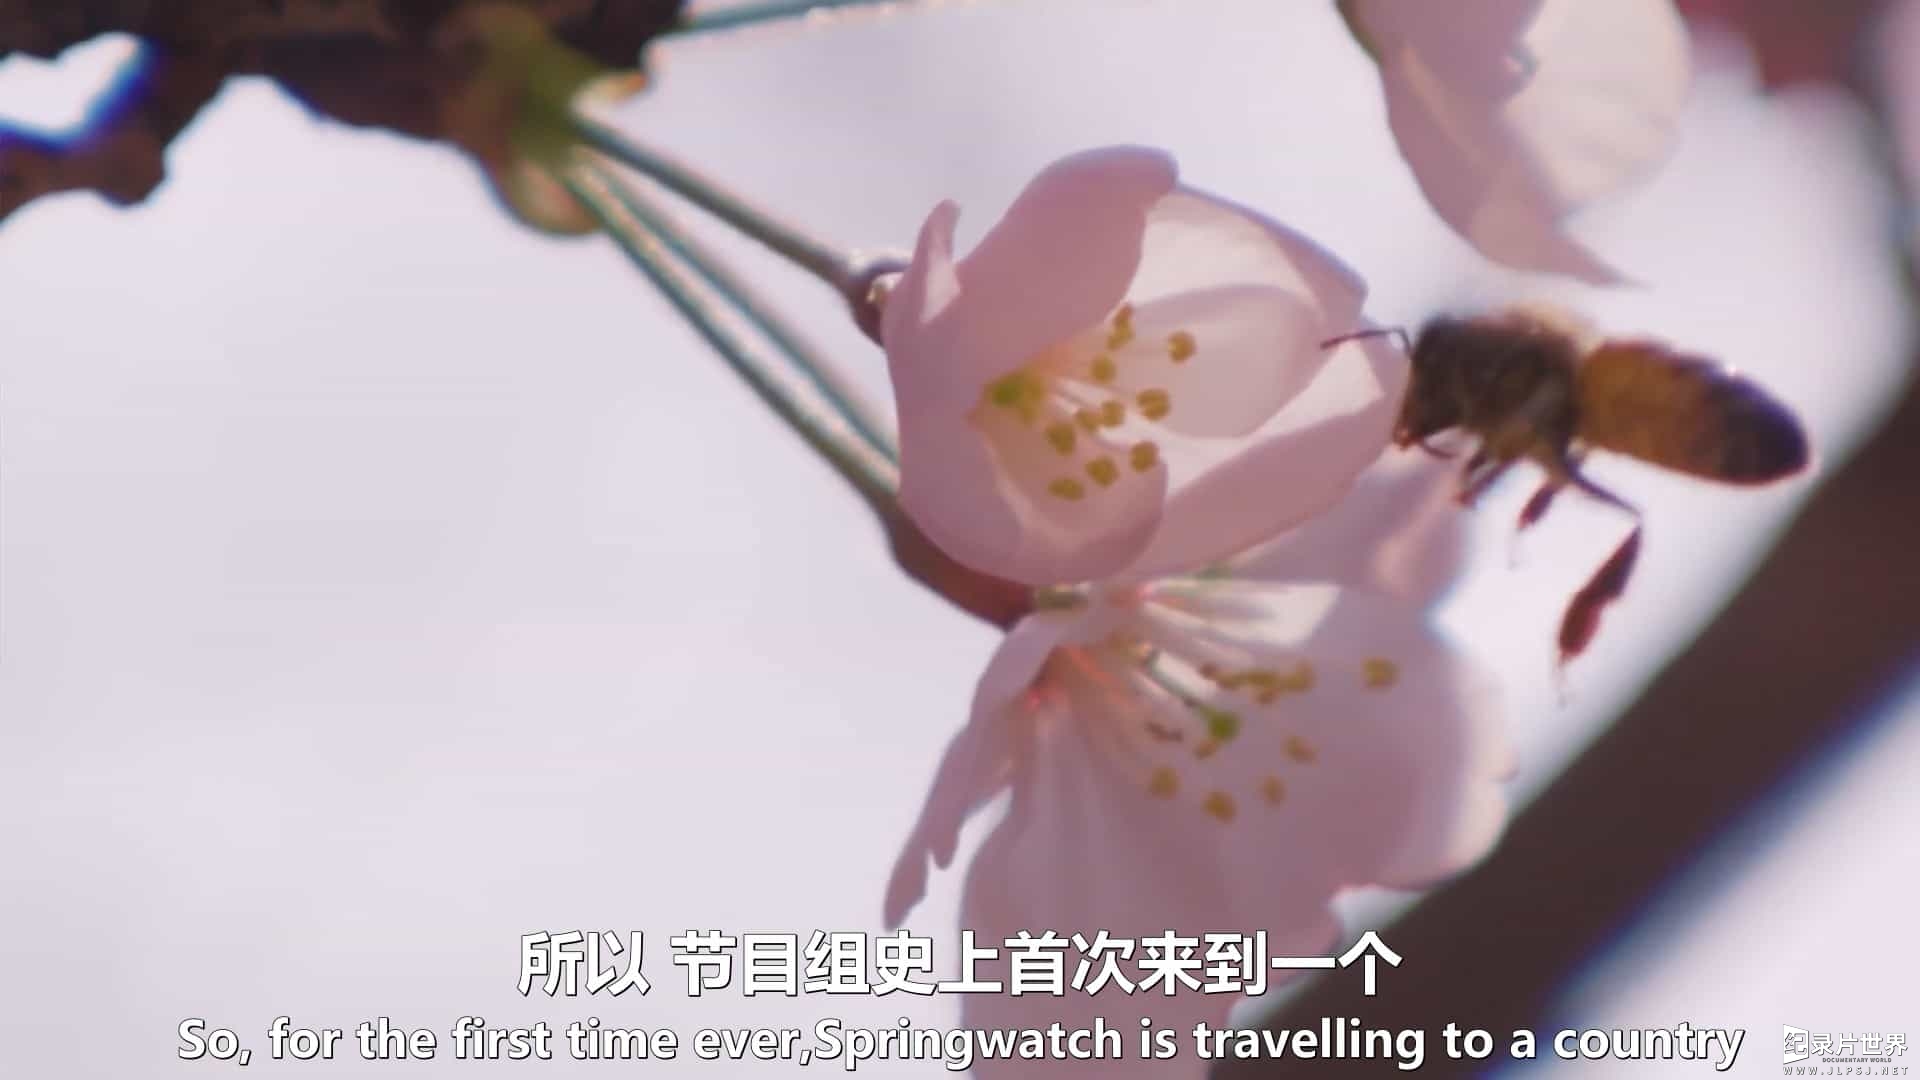 BBC纪录片《日本赏春—樱花盛开时节 Springwatch in Japan Cherry Blossom Time 2017》全1集